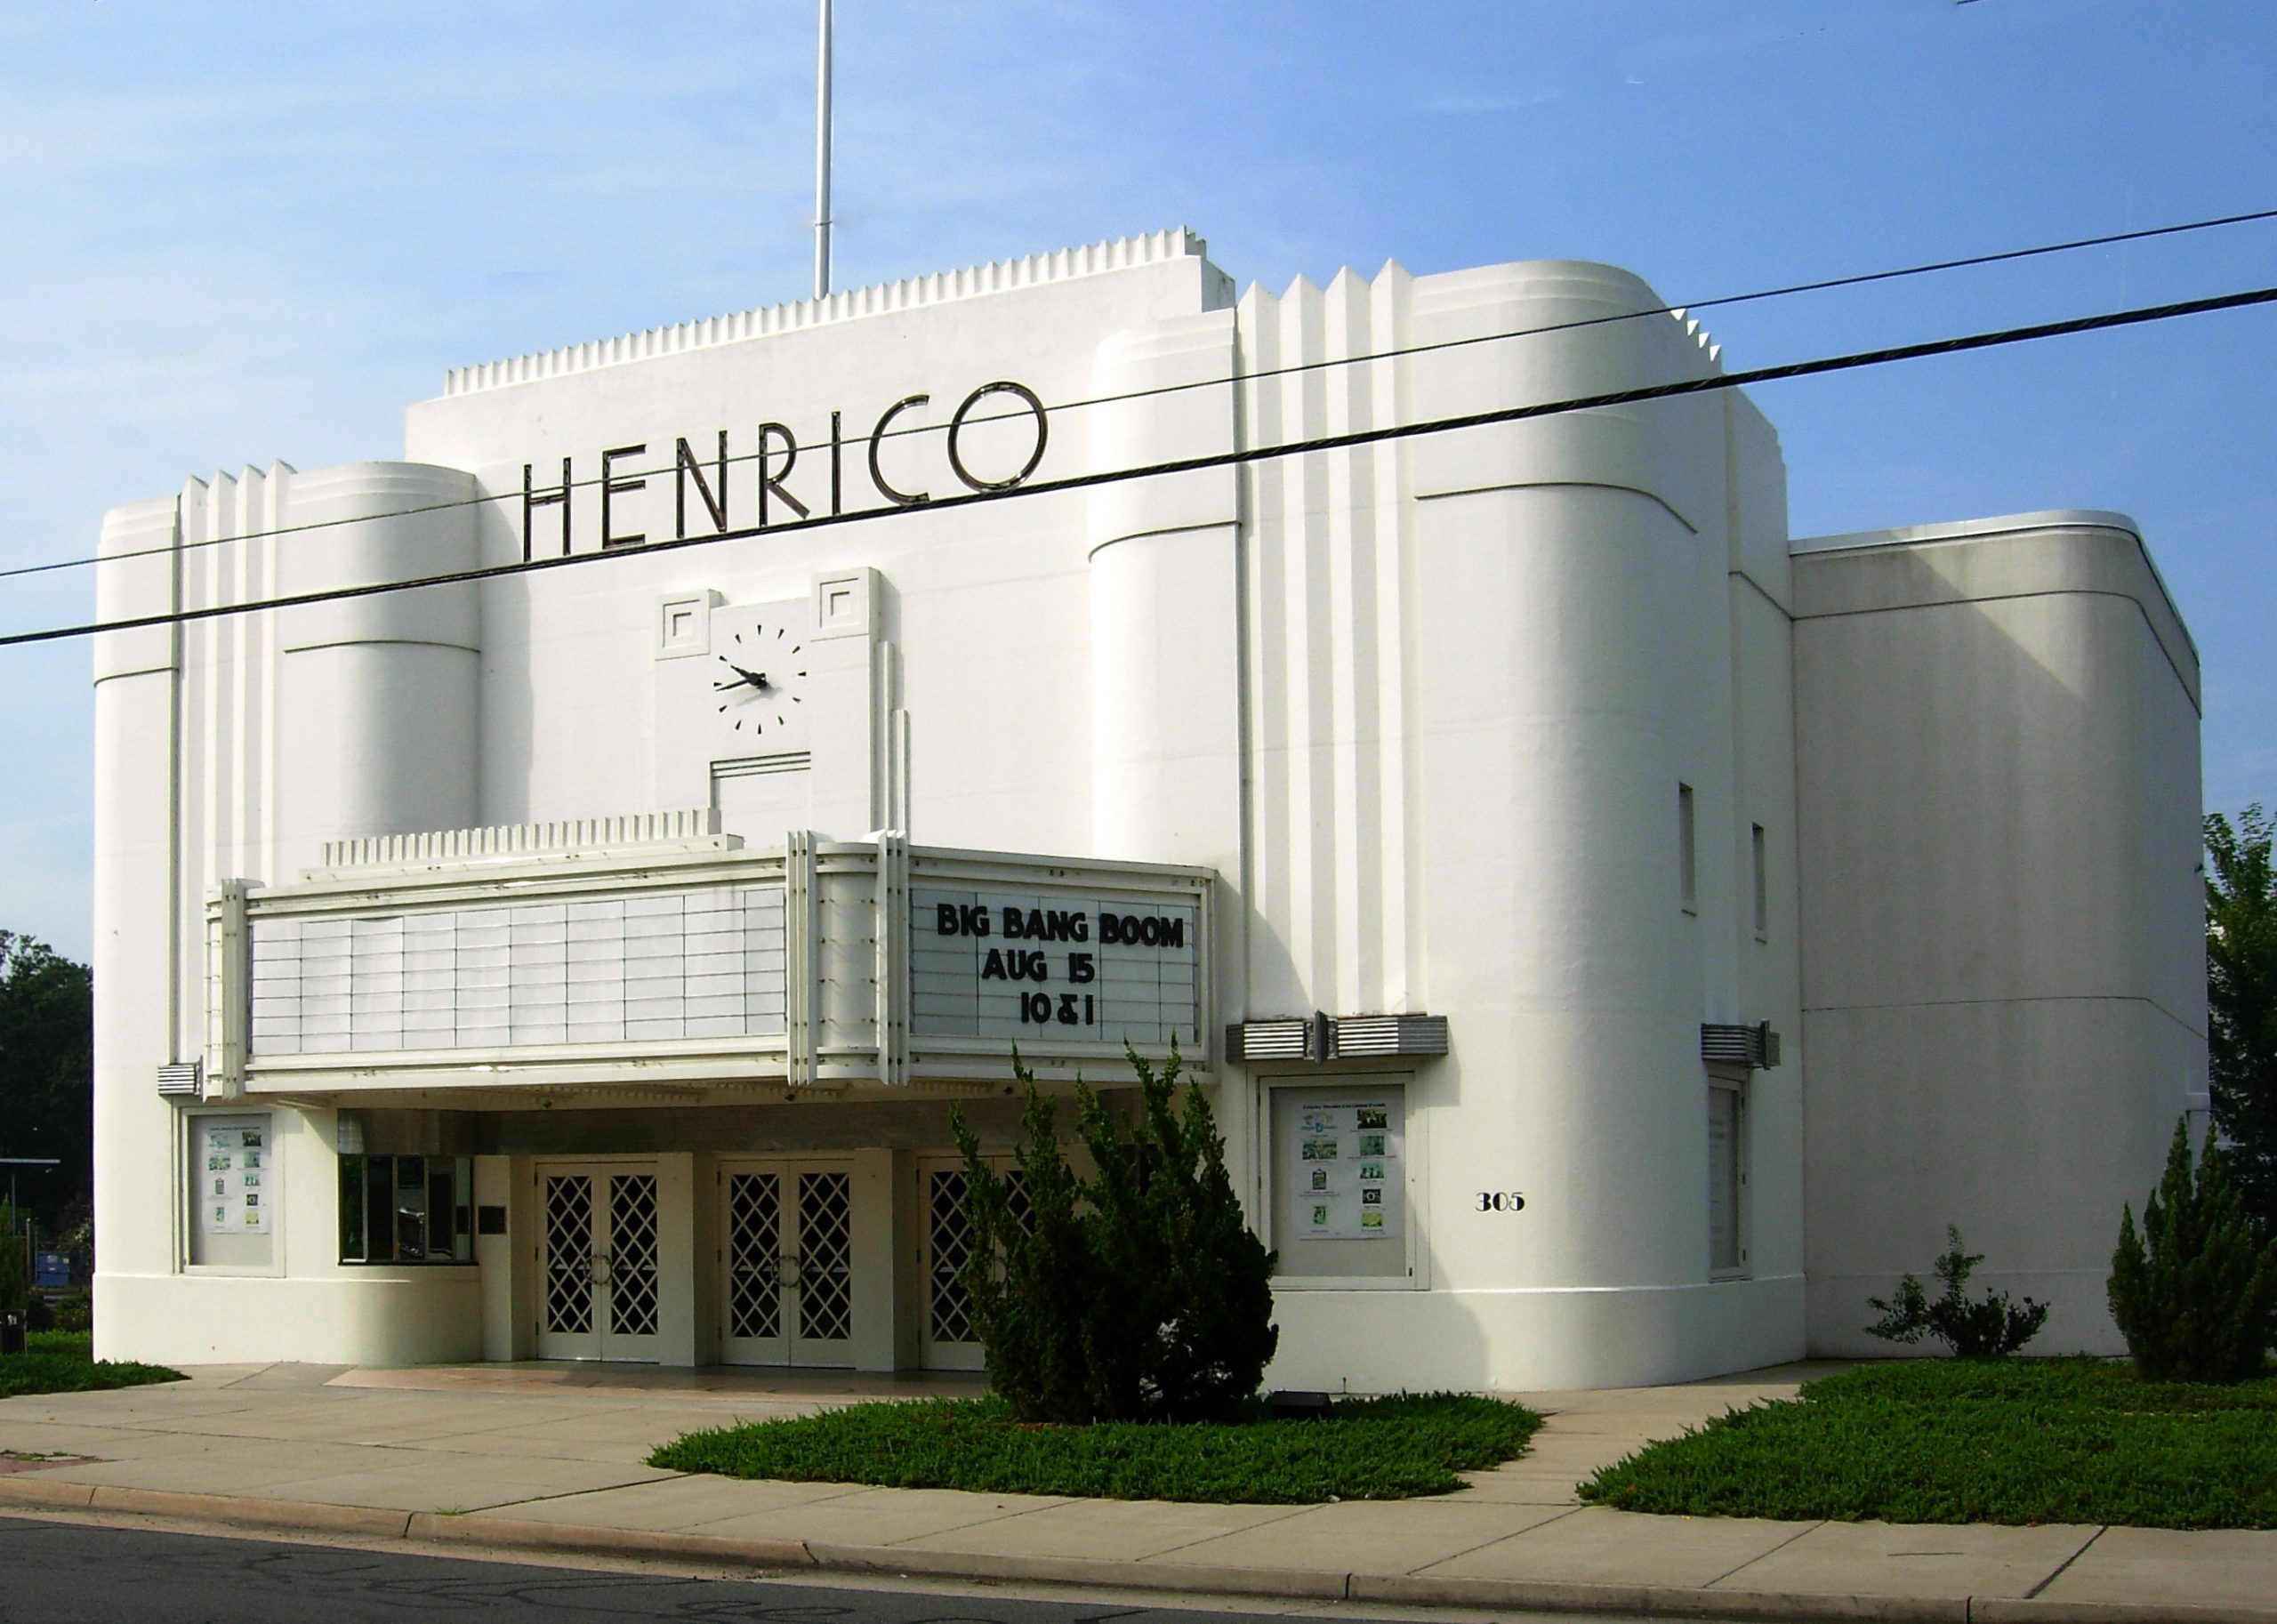 Henrico Theatre